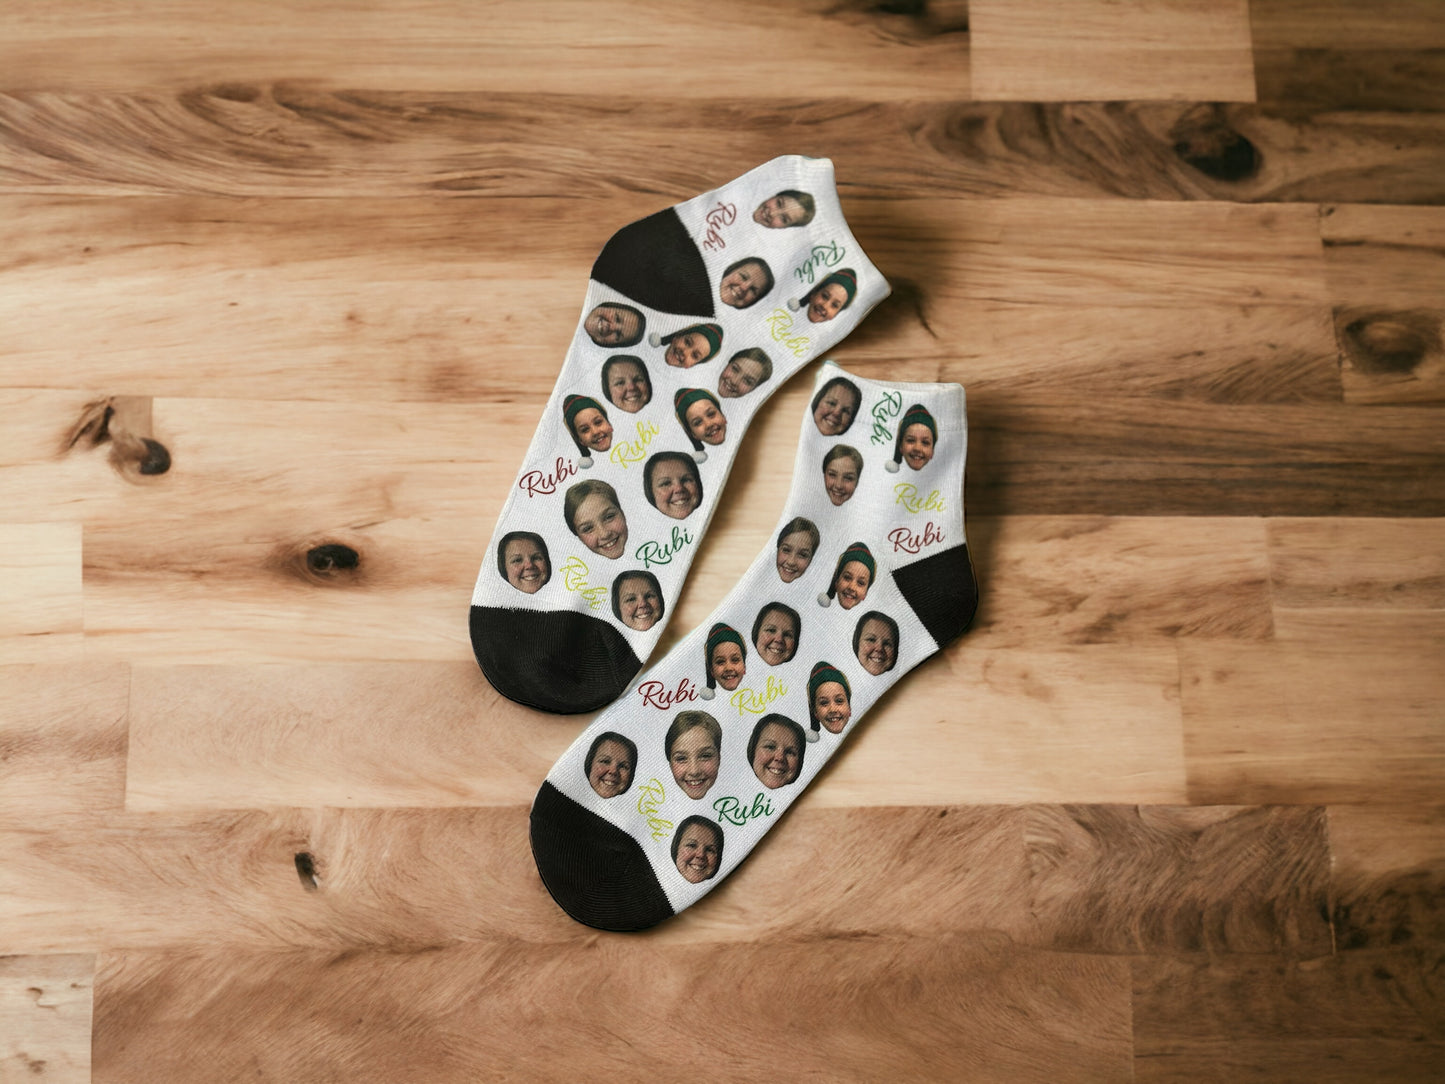 Personalised socks